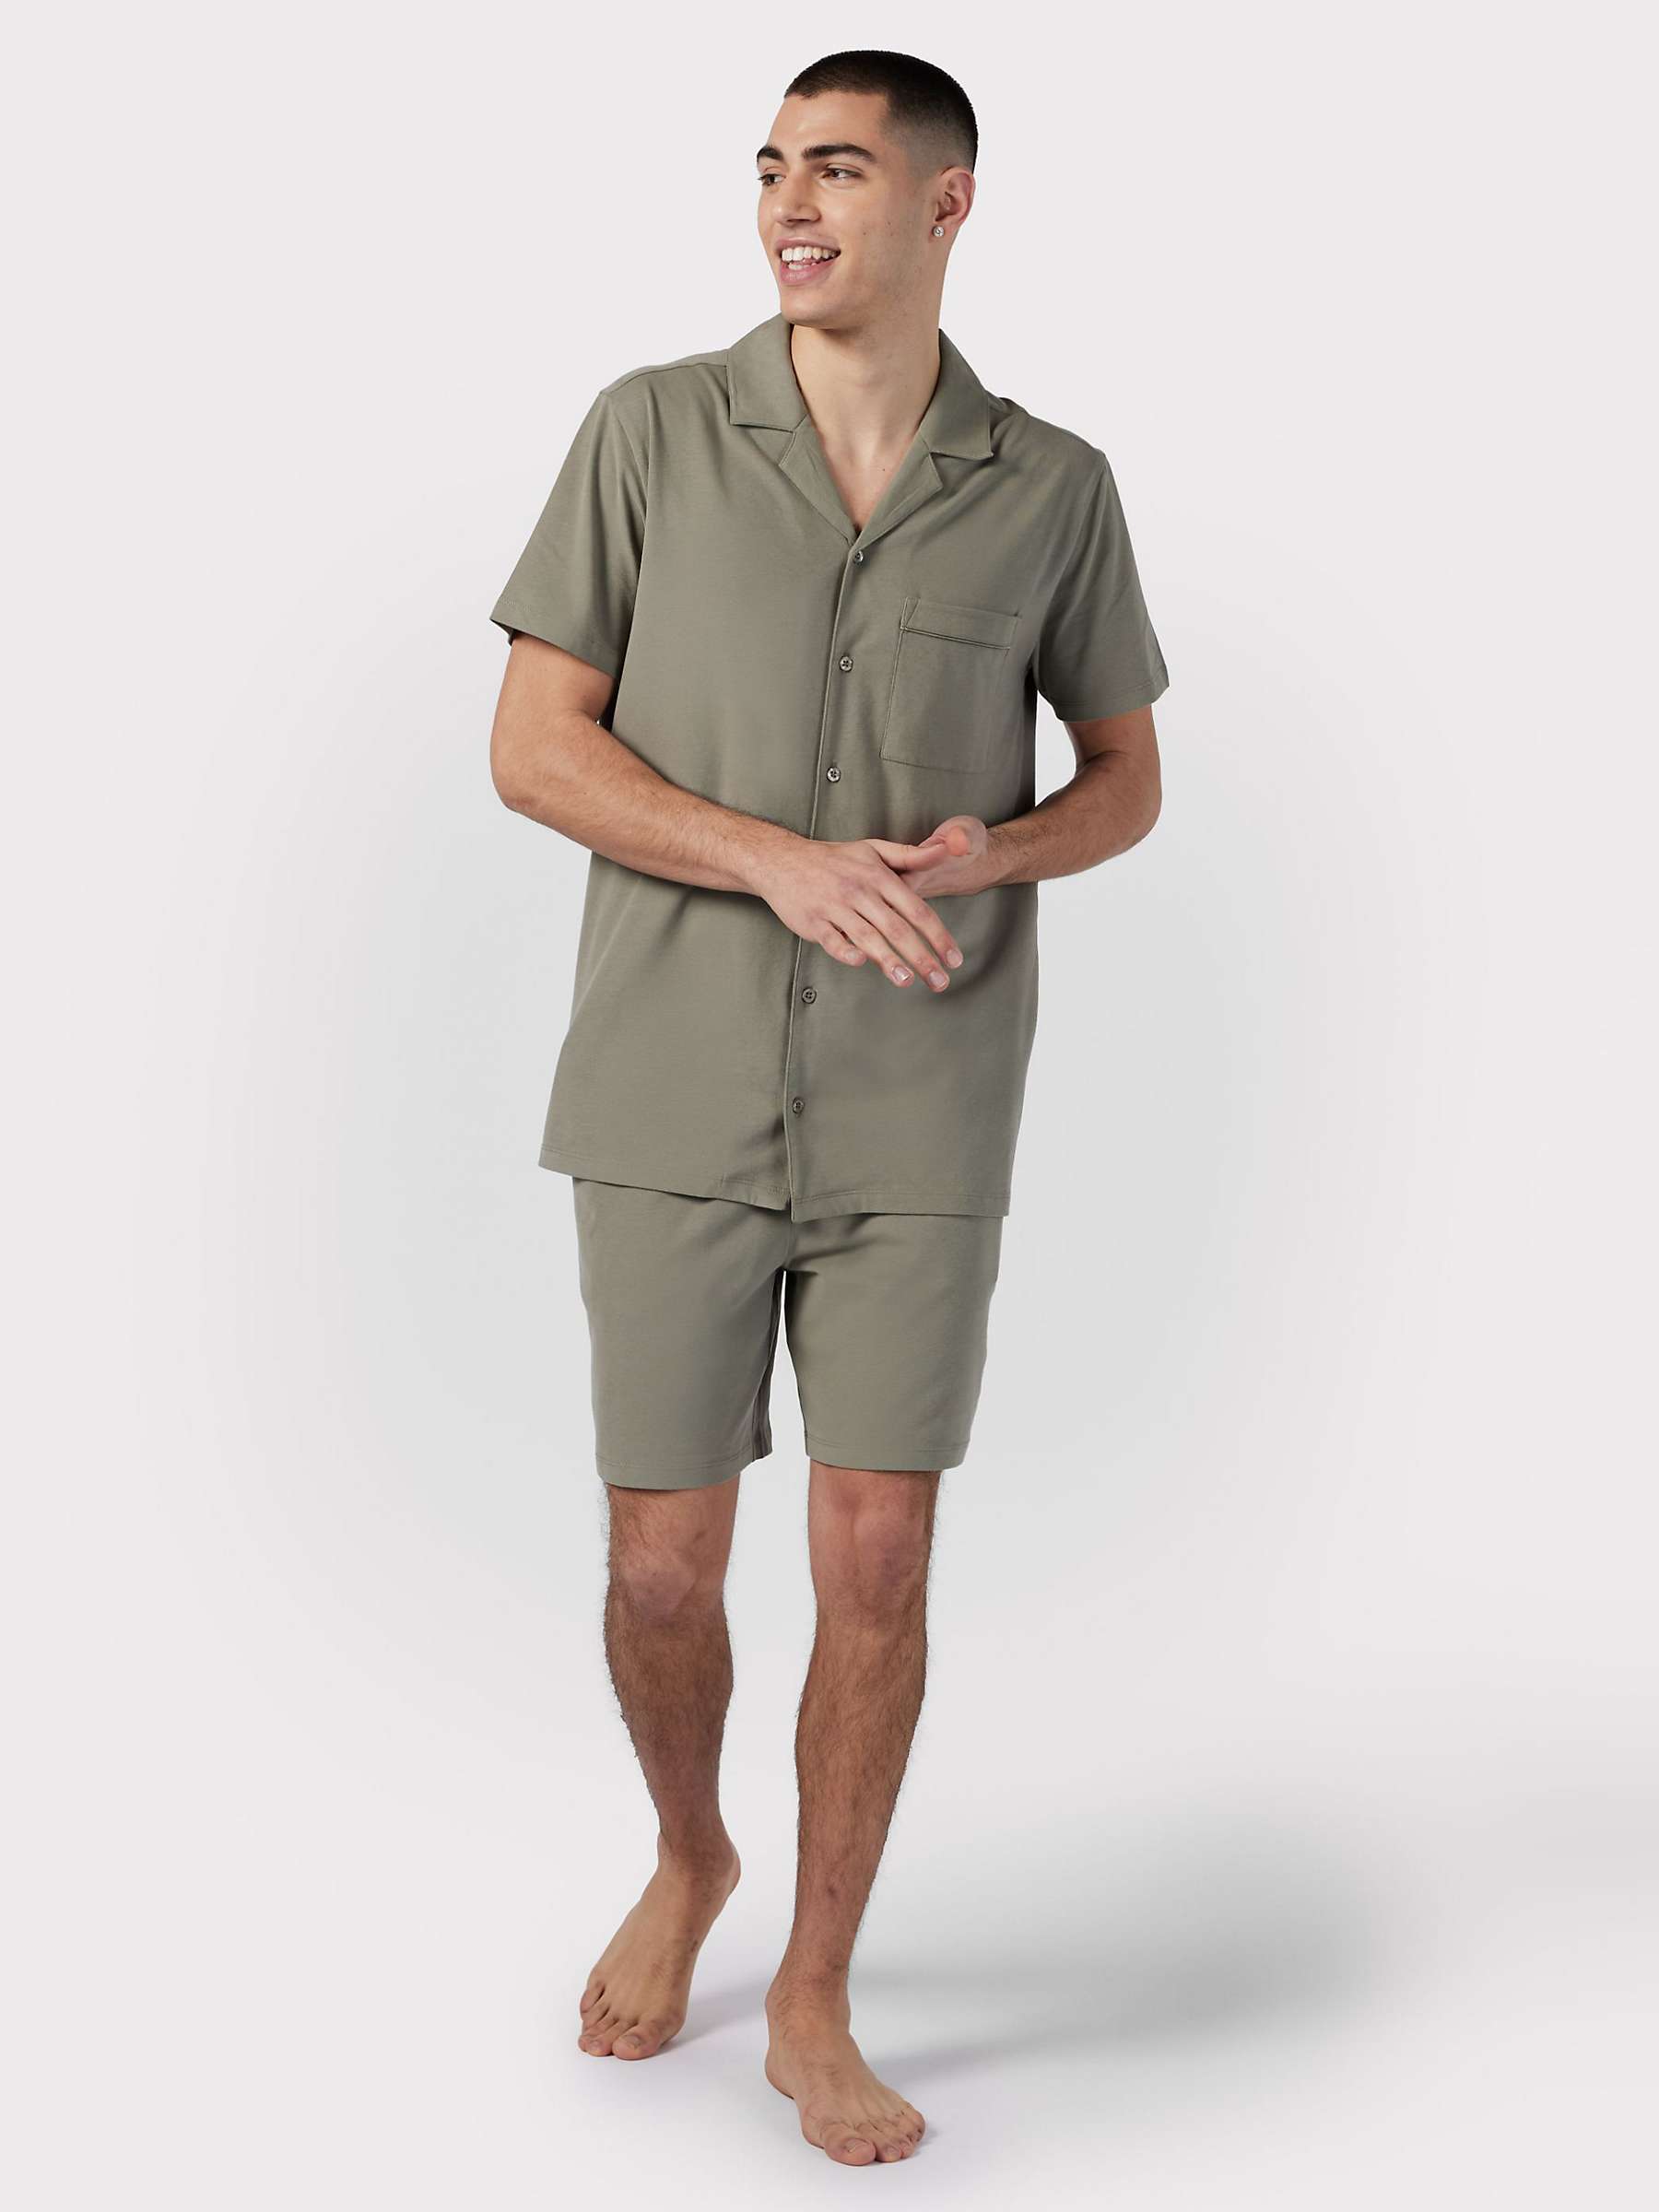 Buy Chelsea Peers Organic Cotton Shorts Pyjama Set Online at johnlewis.com